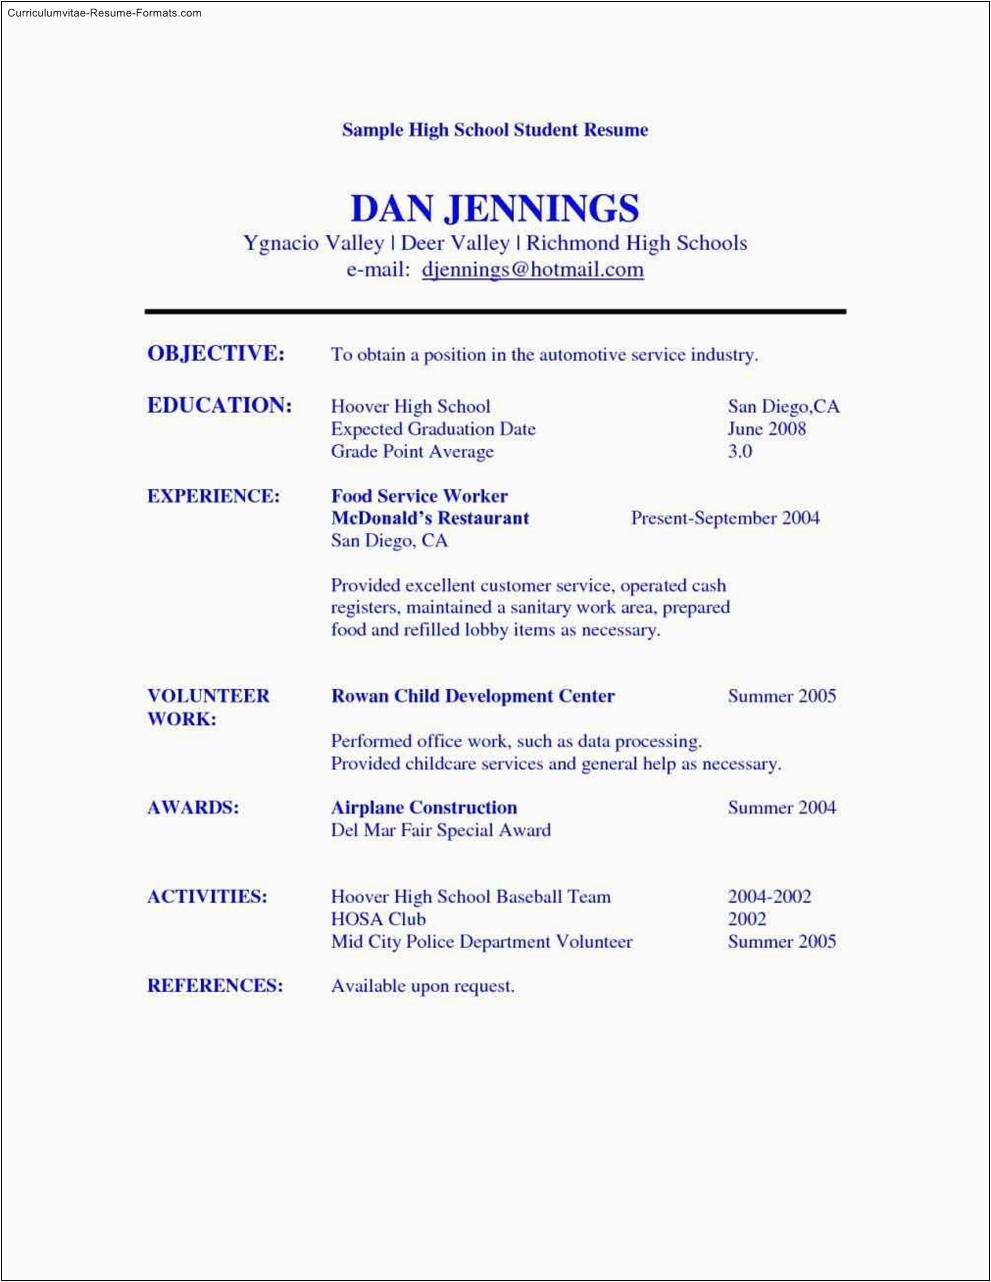 Printable Sample Resume for High School Student Highschool Student Resume Template